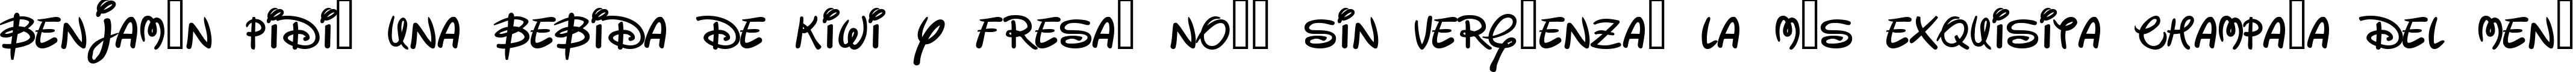 Пример написания шрифтом Walter текста на испанском